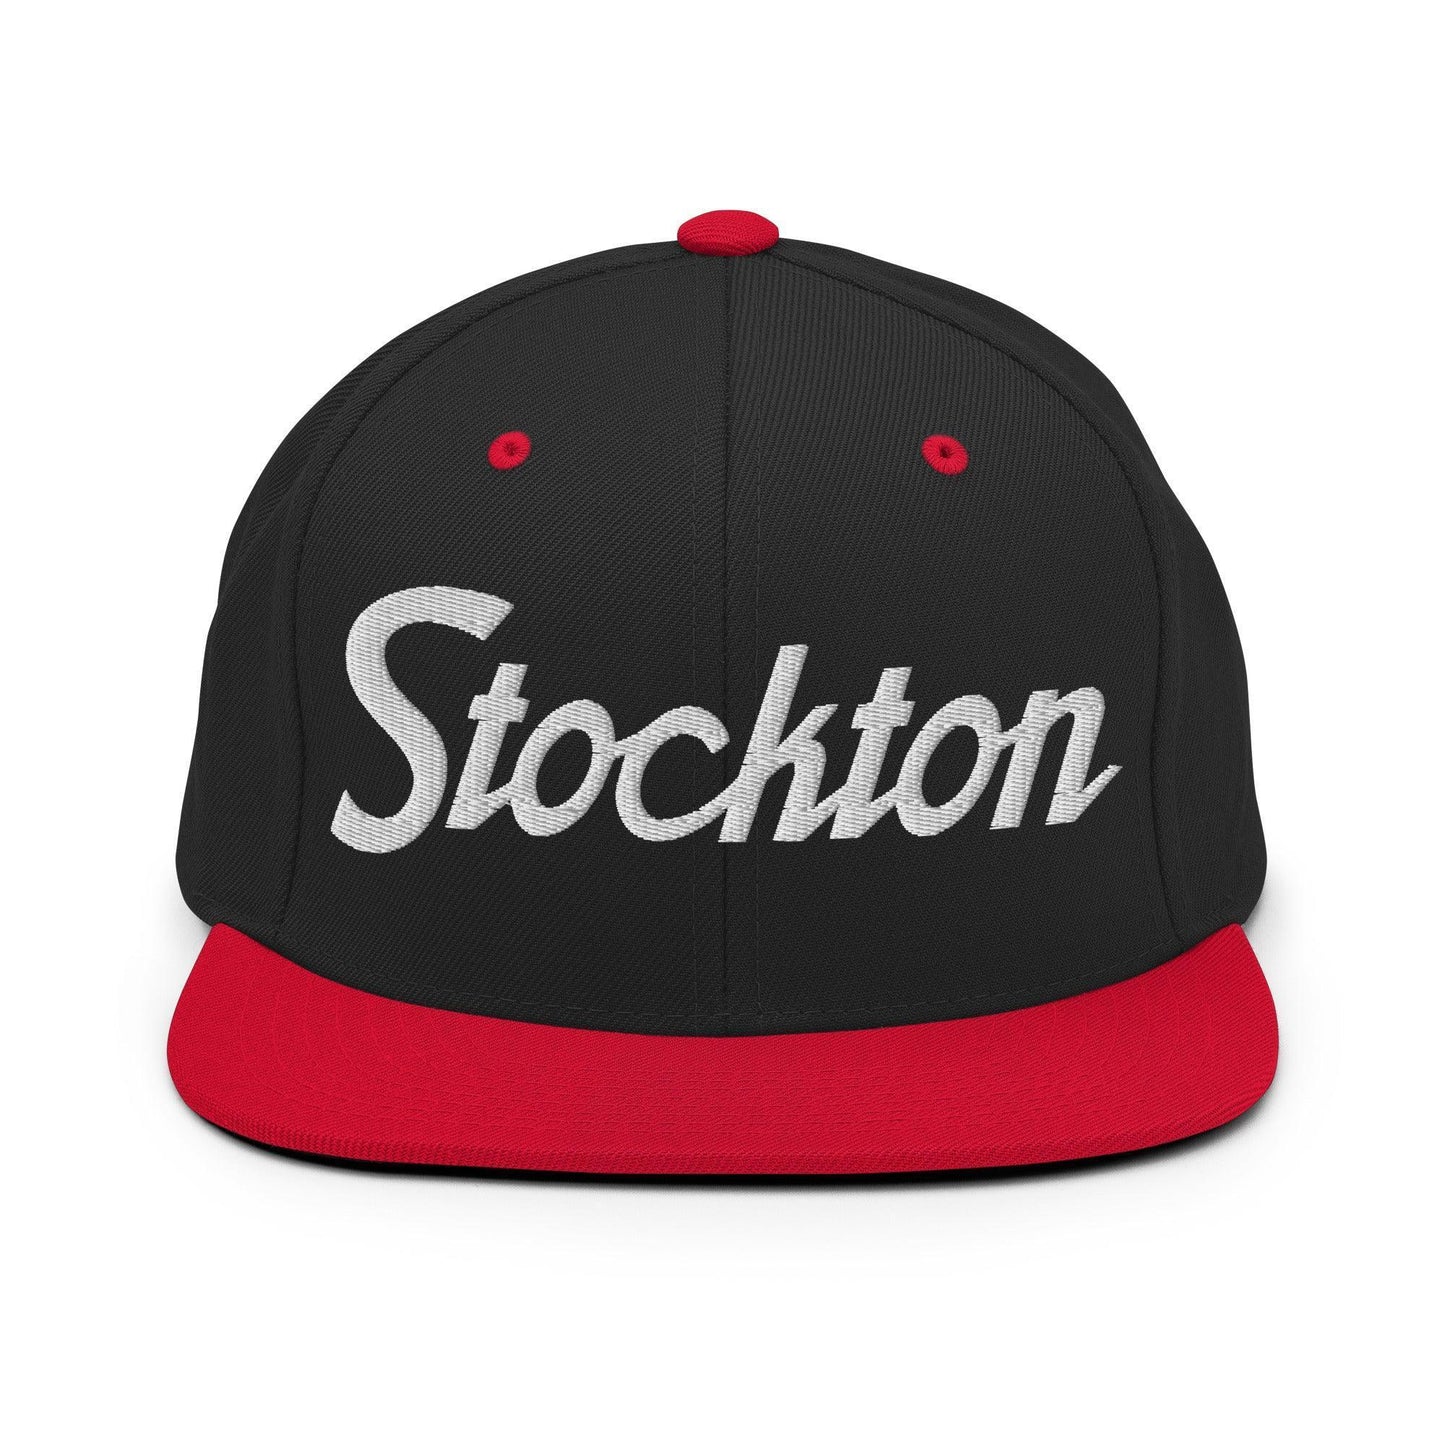 Stockton Script Snapback Hat Black Red